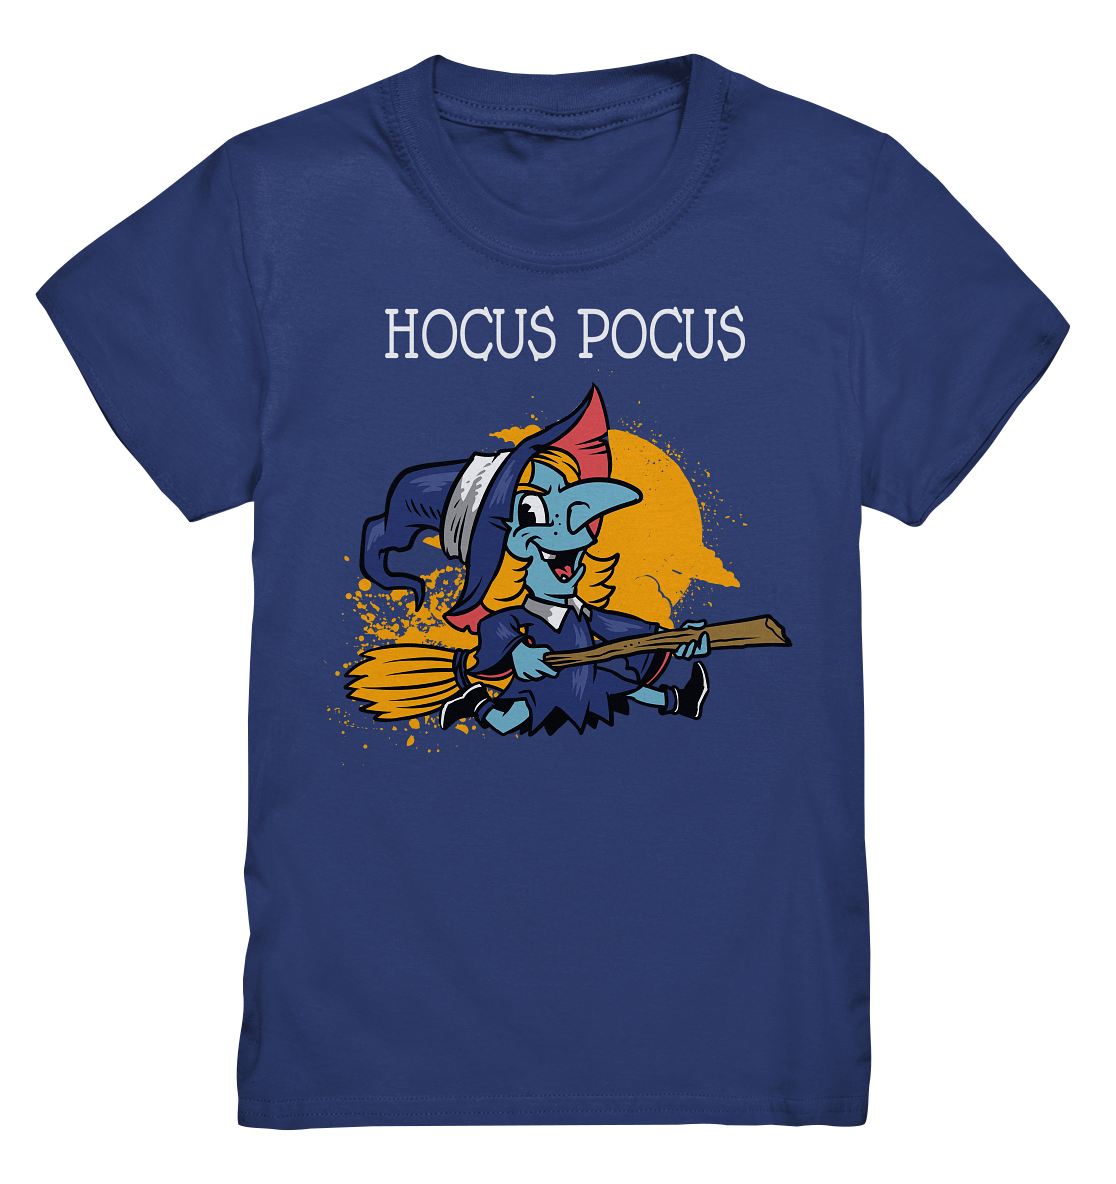 Hocus Pocus. Hexe auf Besen - Kids Premium Shirt